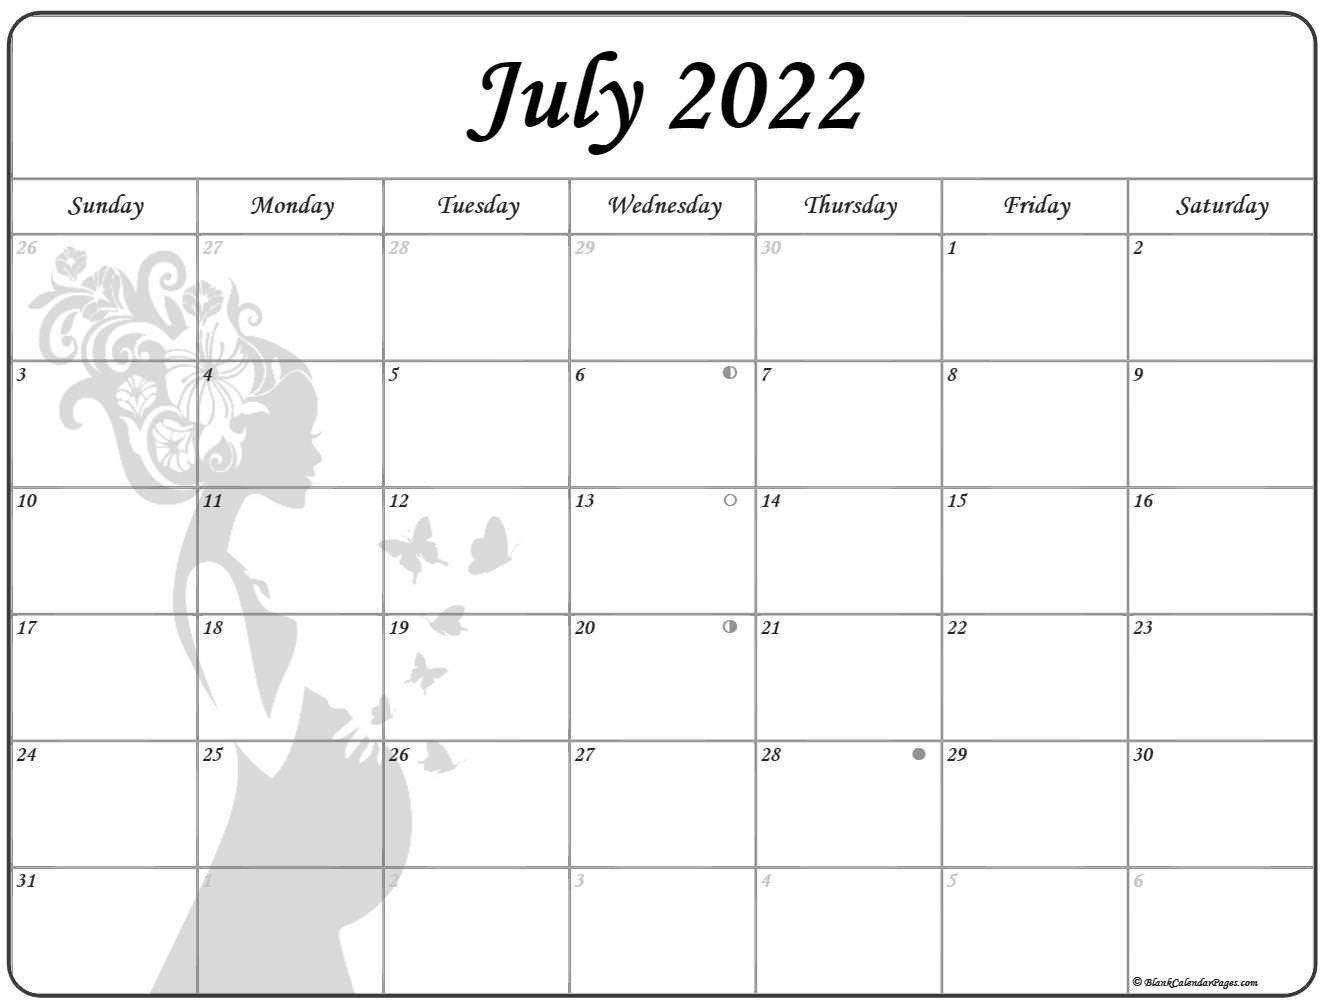 July 2022 Pregnancy Calendar | Fertility Calendar  Free Printable Lunar Calendar 2022